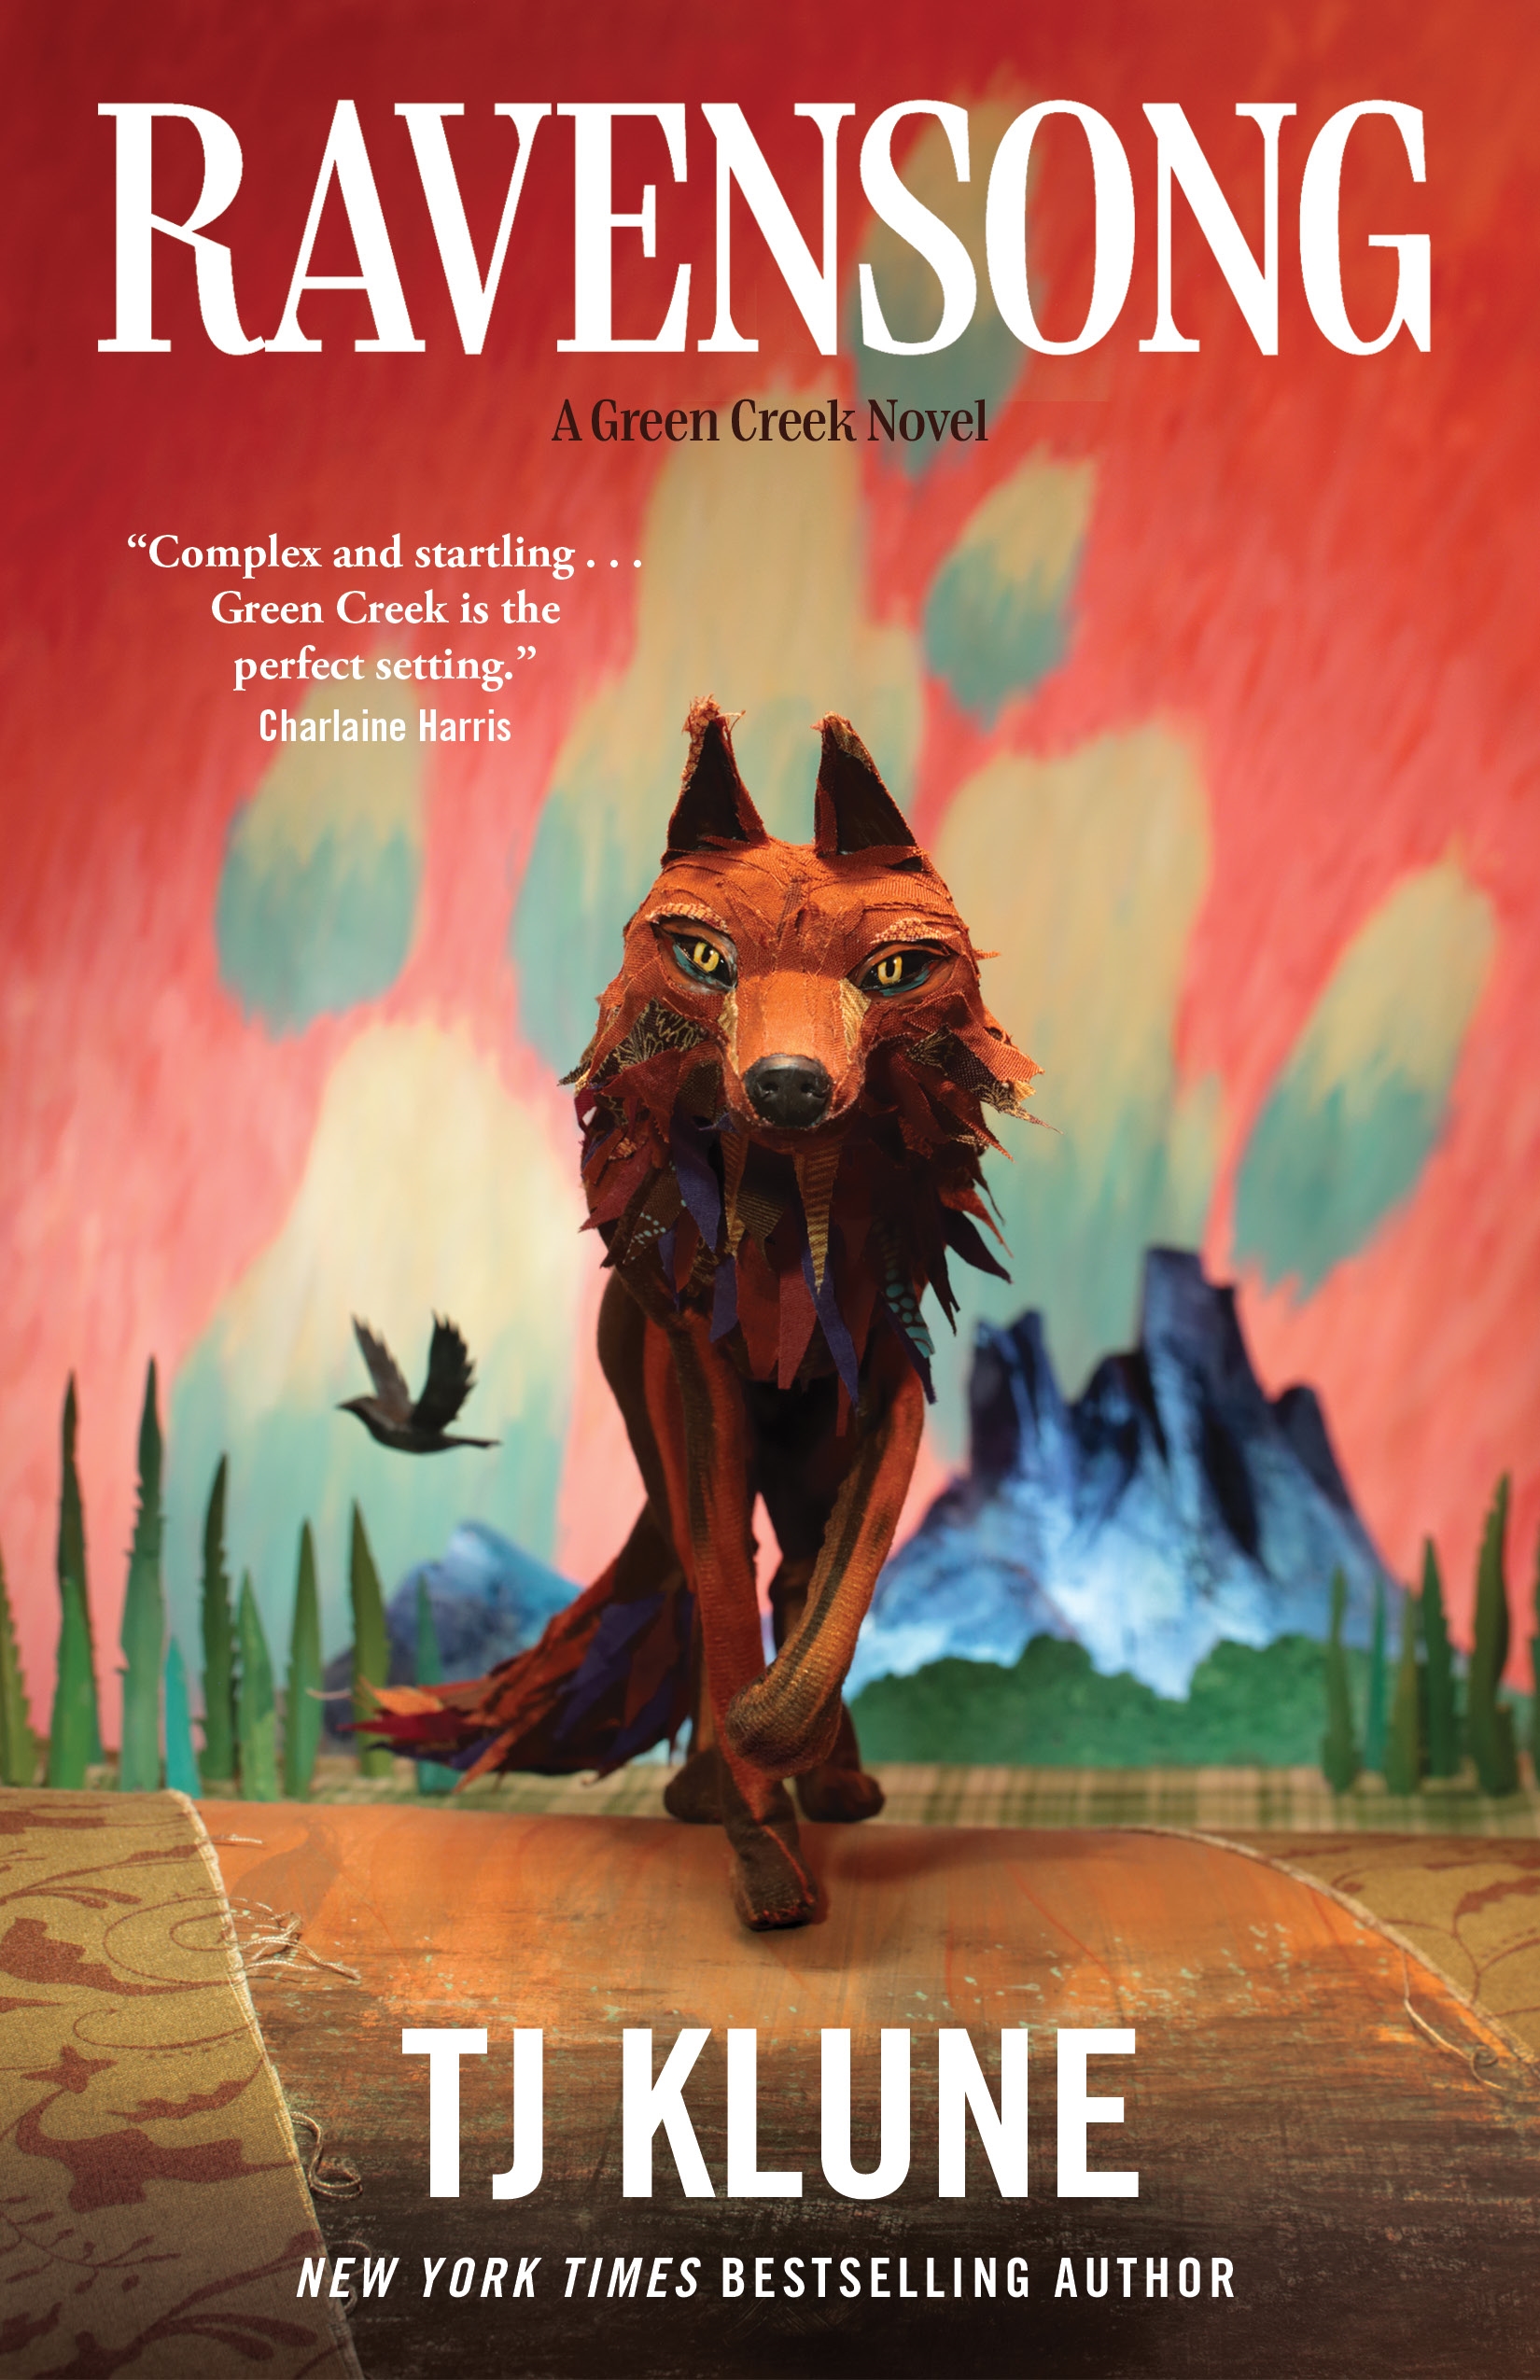 Ravensong : A Green Creek Novel by TJ Klune